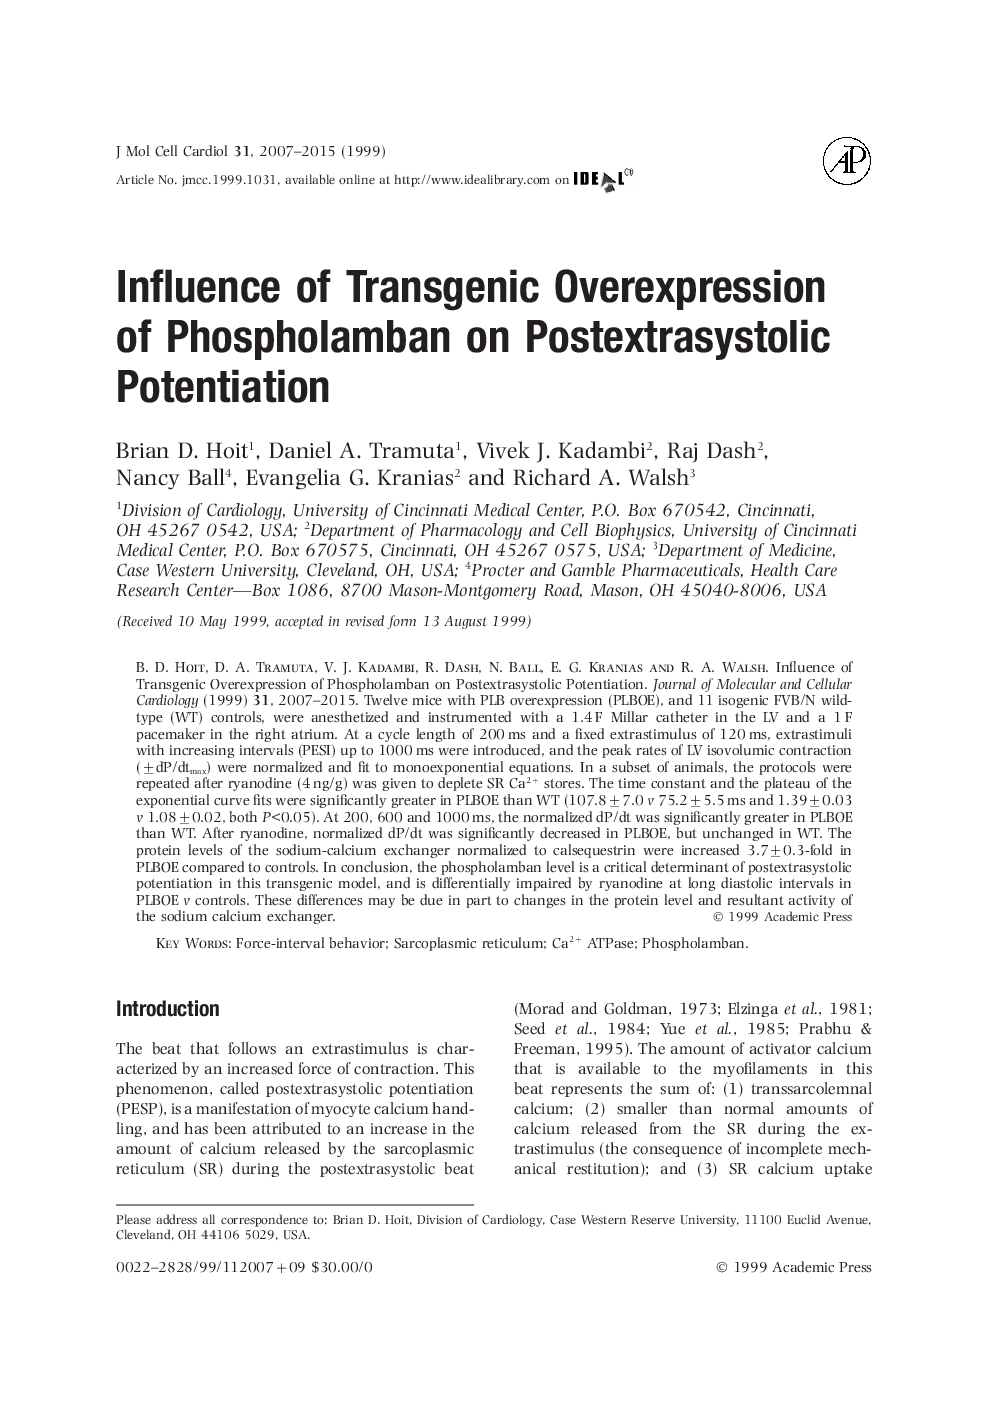 Influence of Transgenic Overexpression of Phospholamban on Postextrasystolic Potentiation 